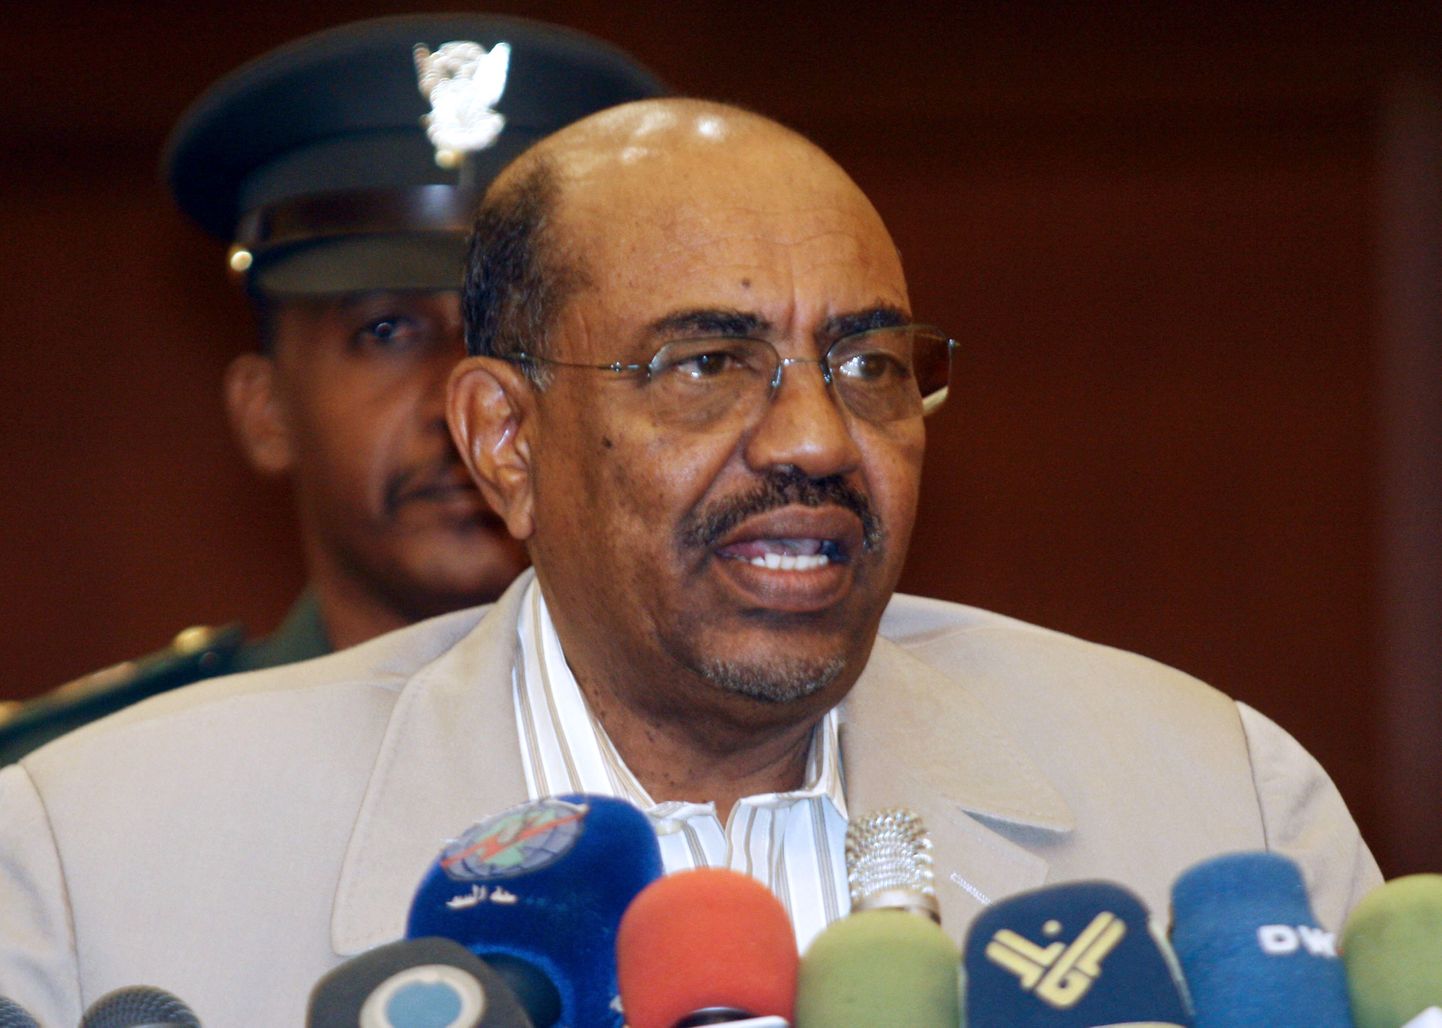 Sudaani president Omar Hassan al-Bashir.